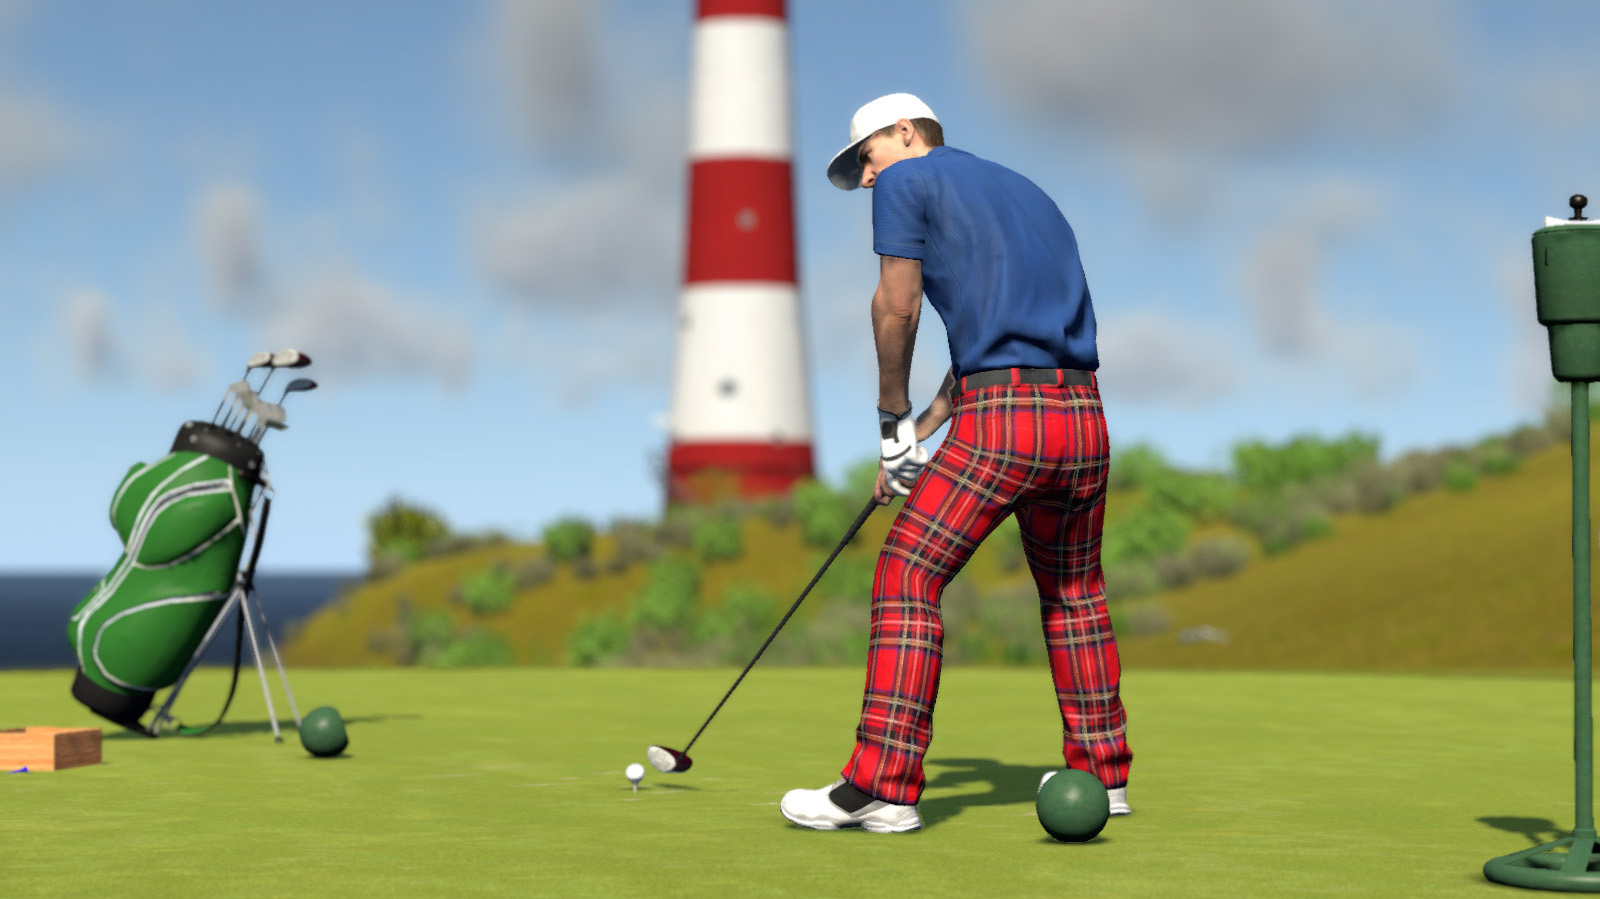 The Golf Club screenshot